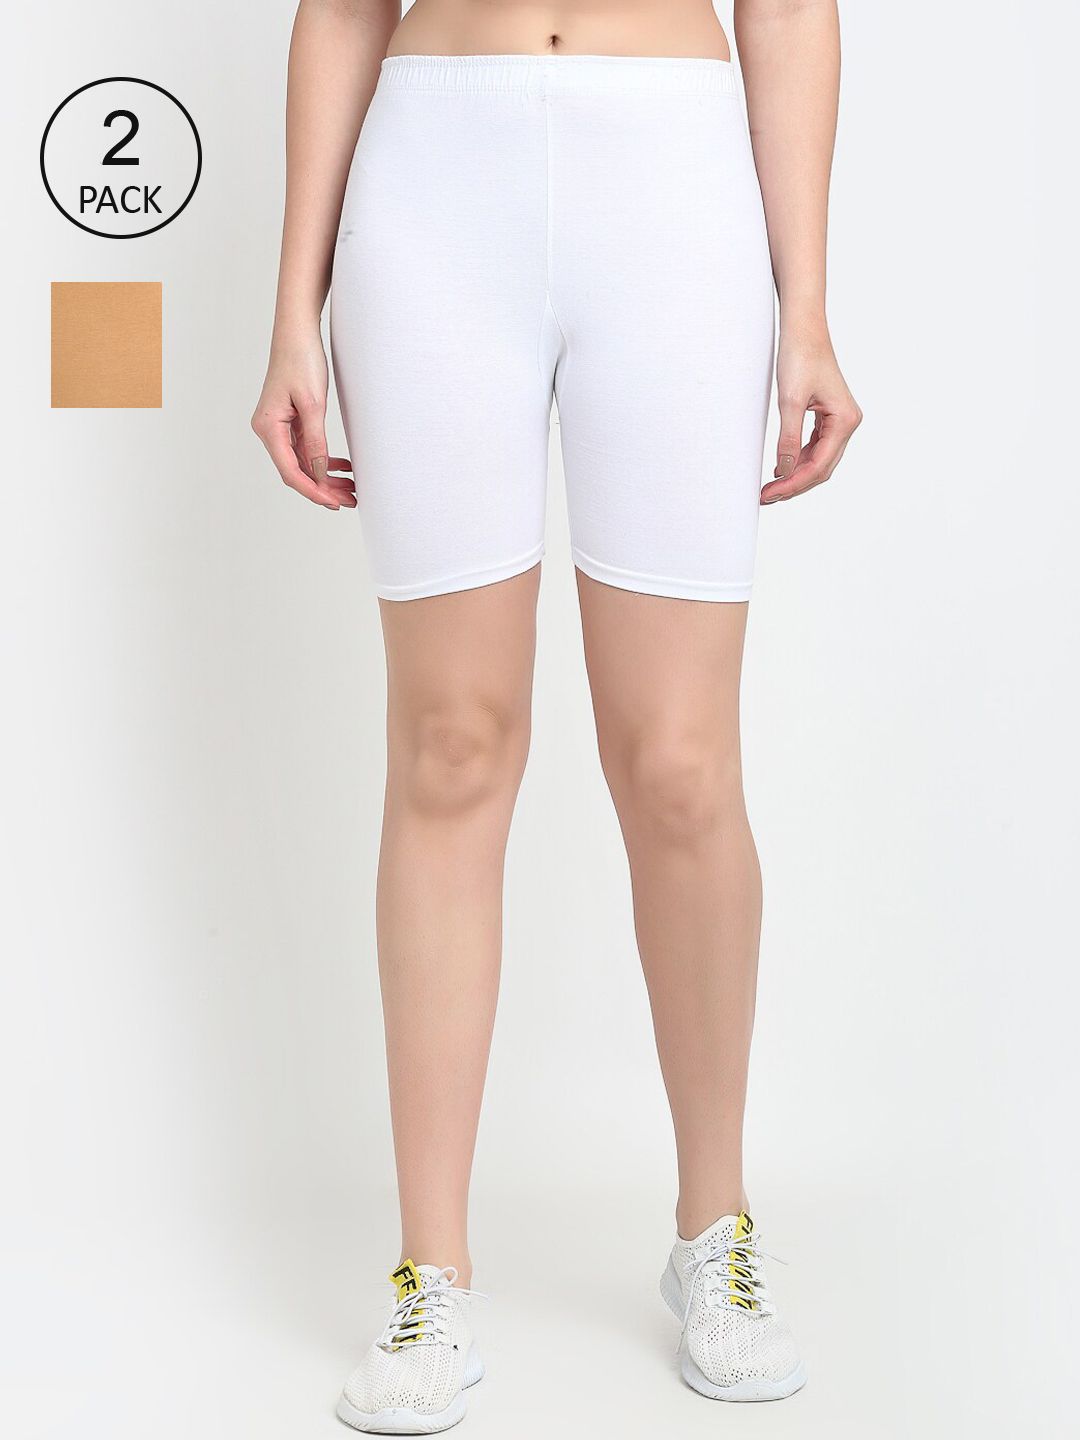 GRACIT Women Pack of 2 White & Beige Biker Shorts Price in India